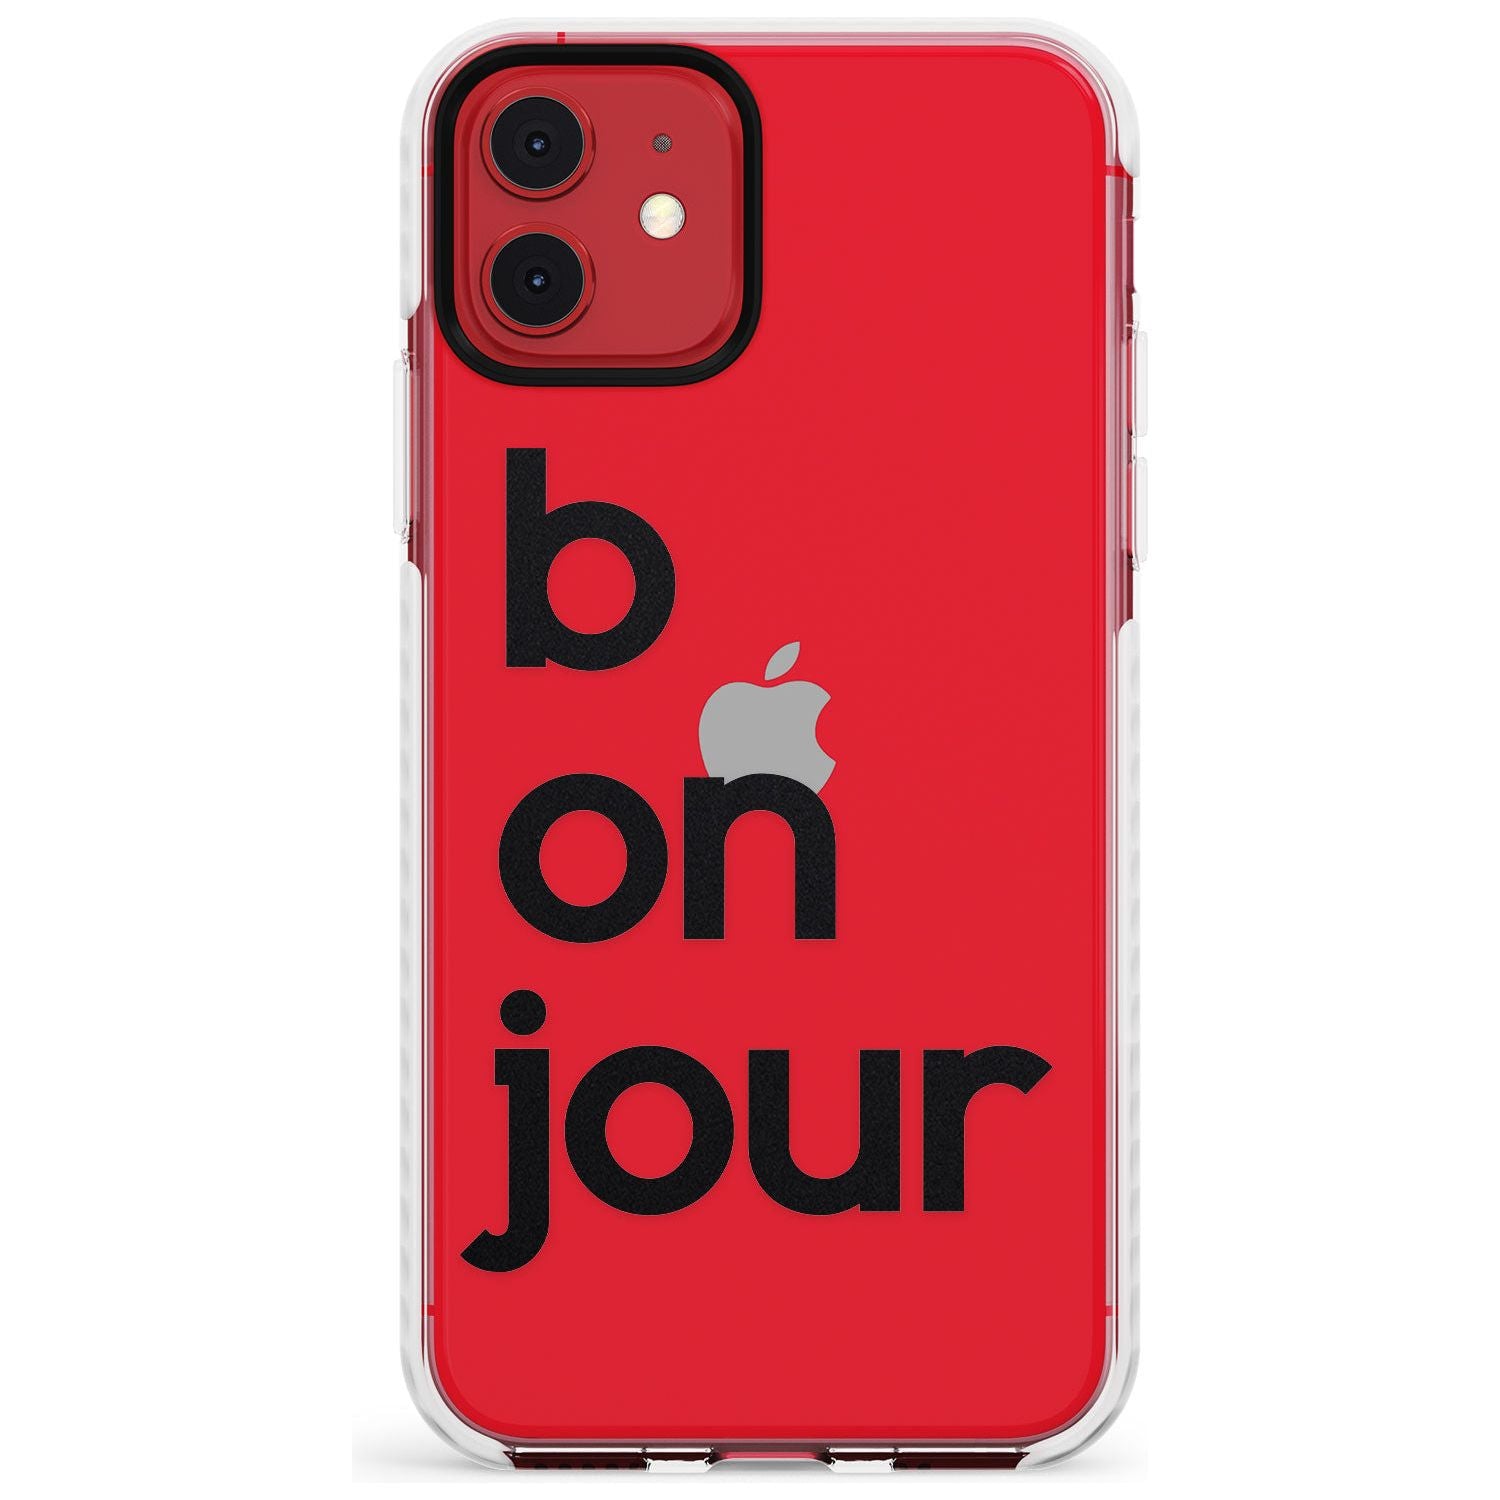 Bonjour Slim TPU Phone Case for iPhone 11